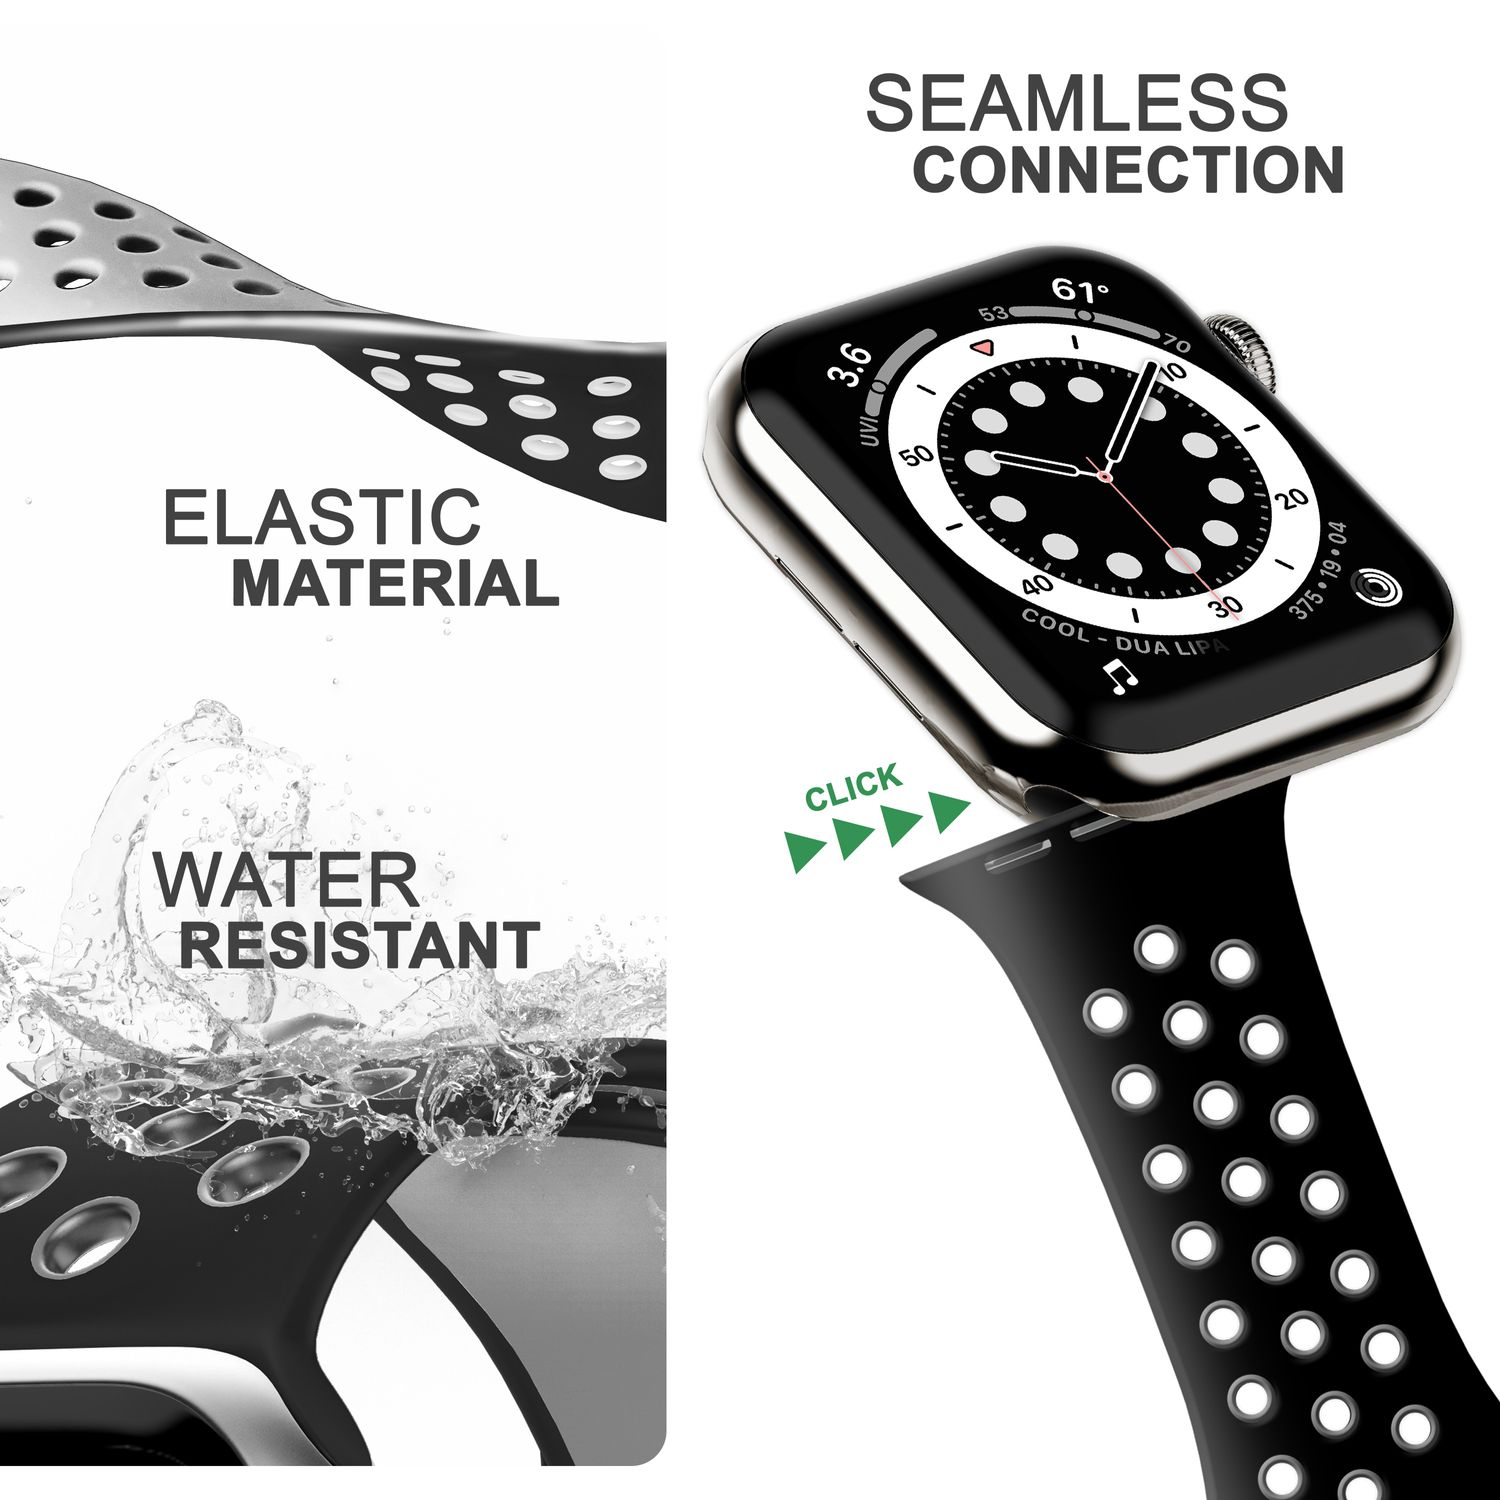 Watch Apple, Apple 38mm/40mm/41mm, Grau Smart-Watch Armband, Airflow Ersatzarmband, Silikon Schwarz NALIA